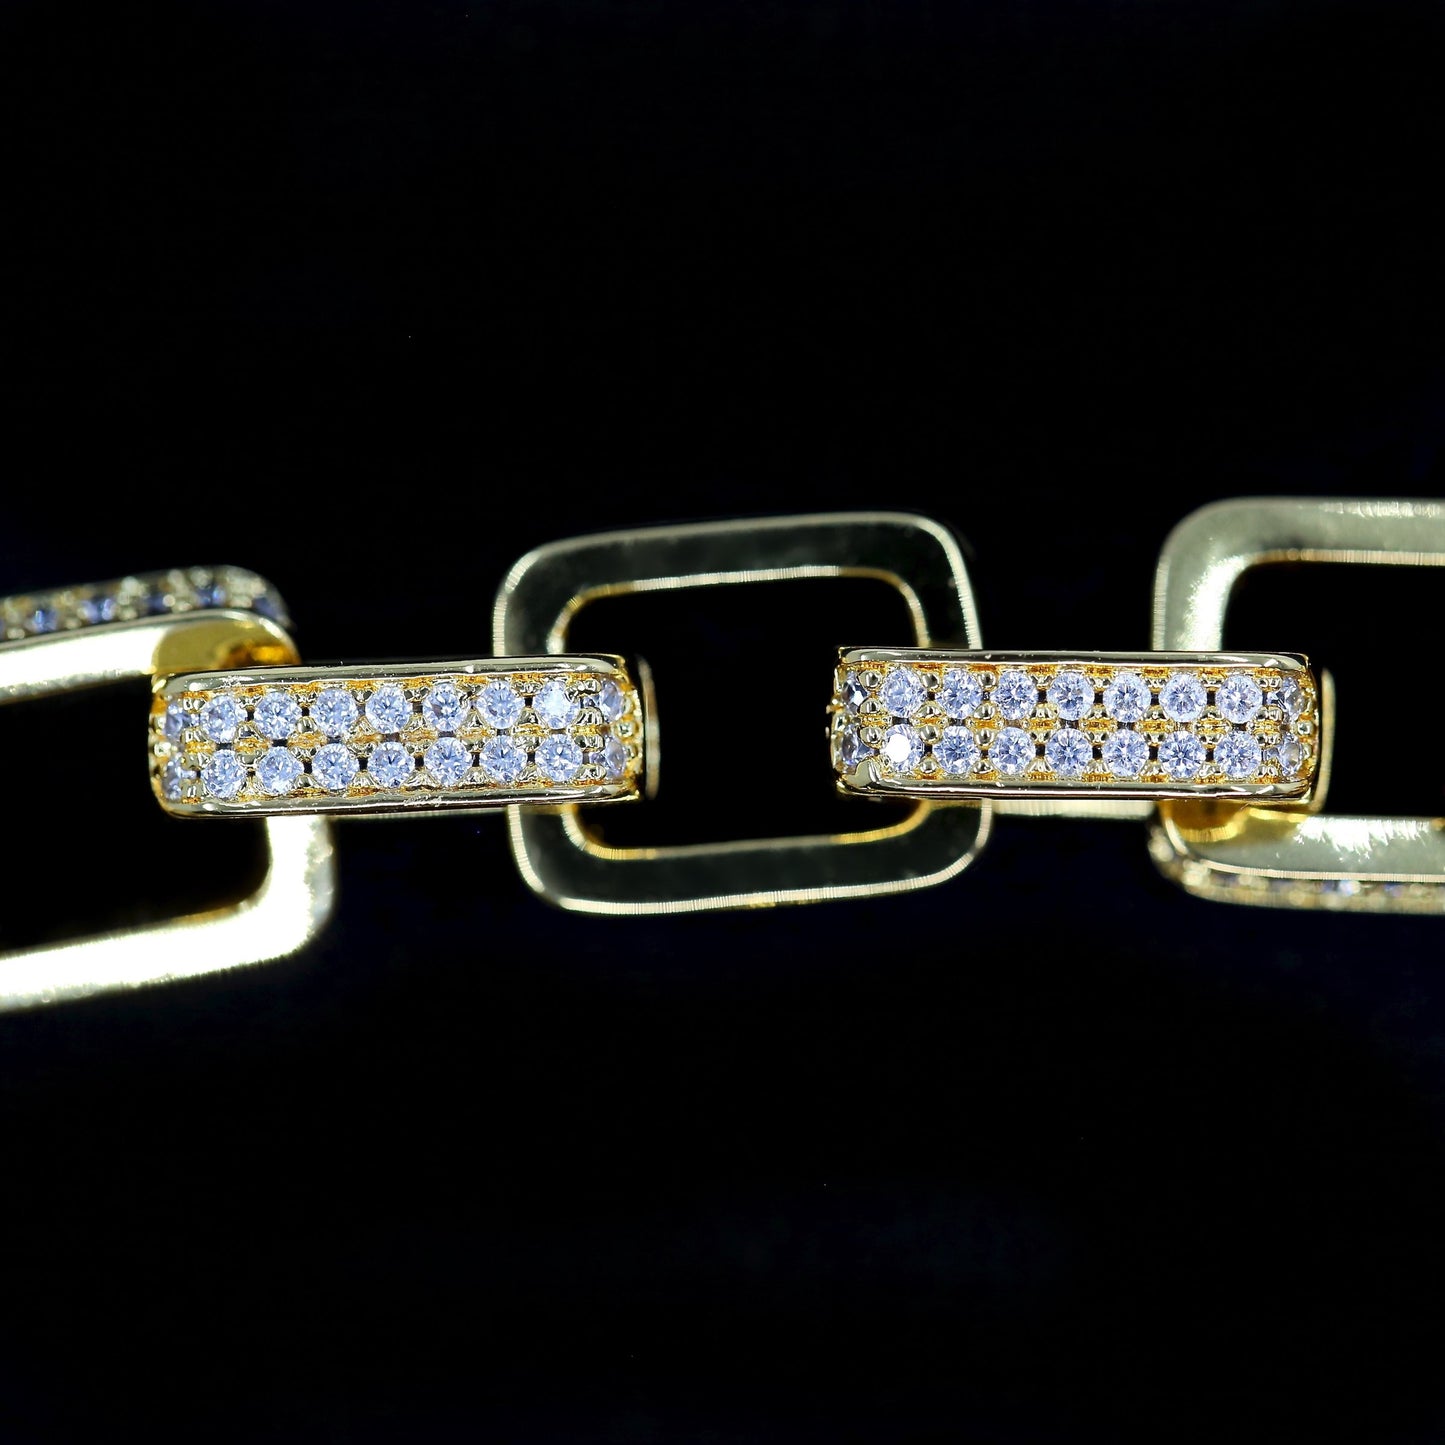 10MM Diamond Hermes Link Chain